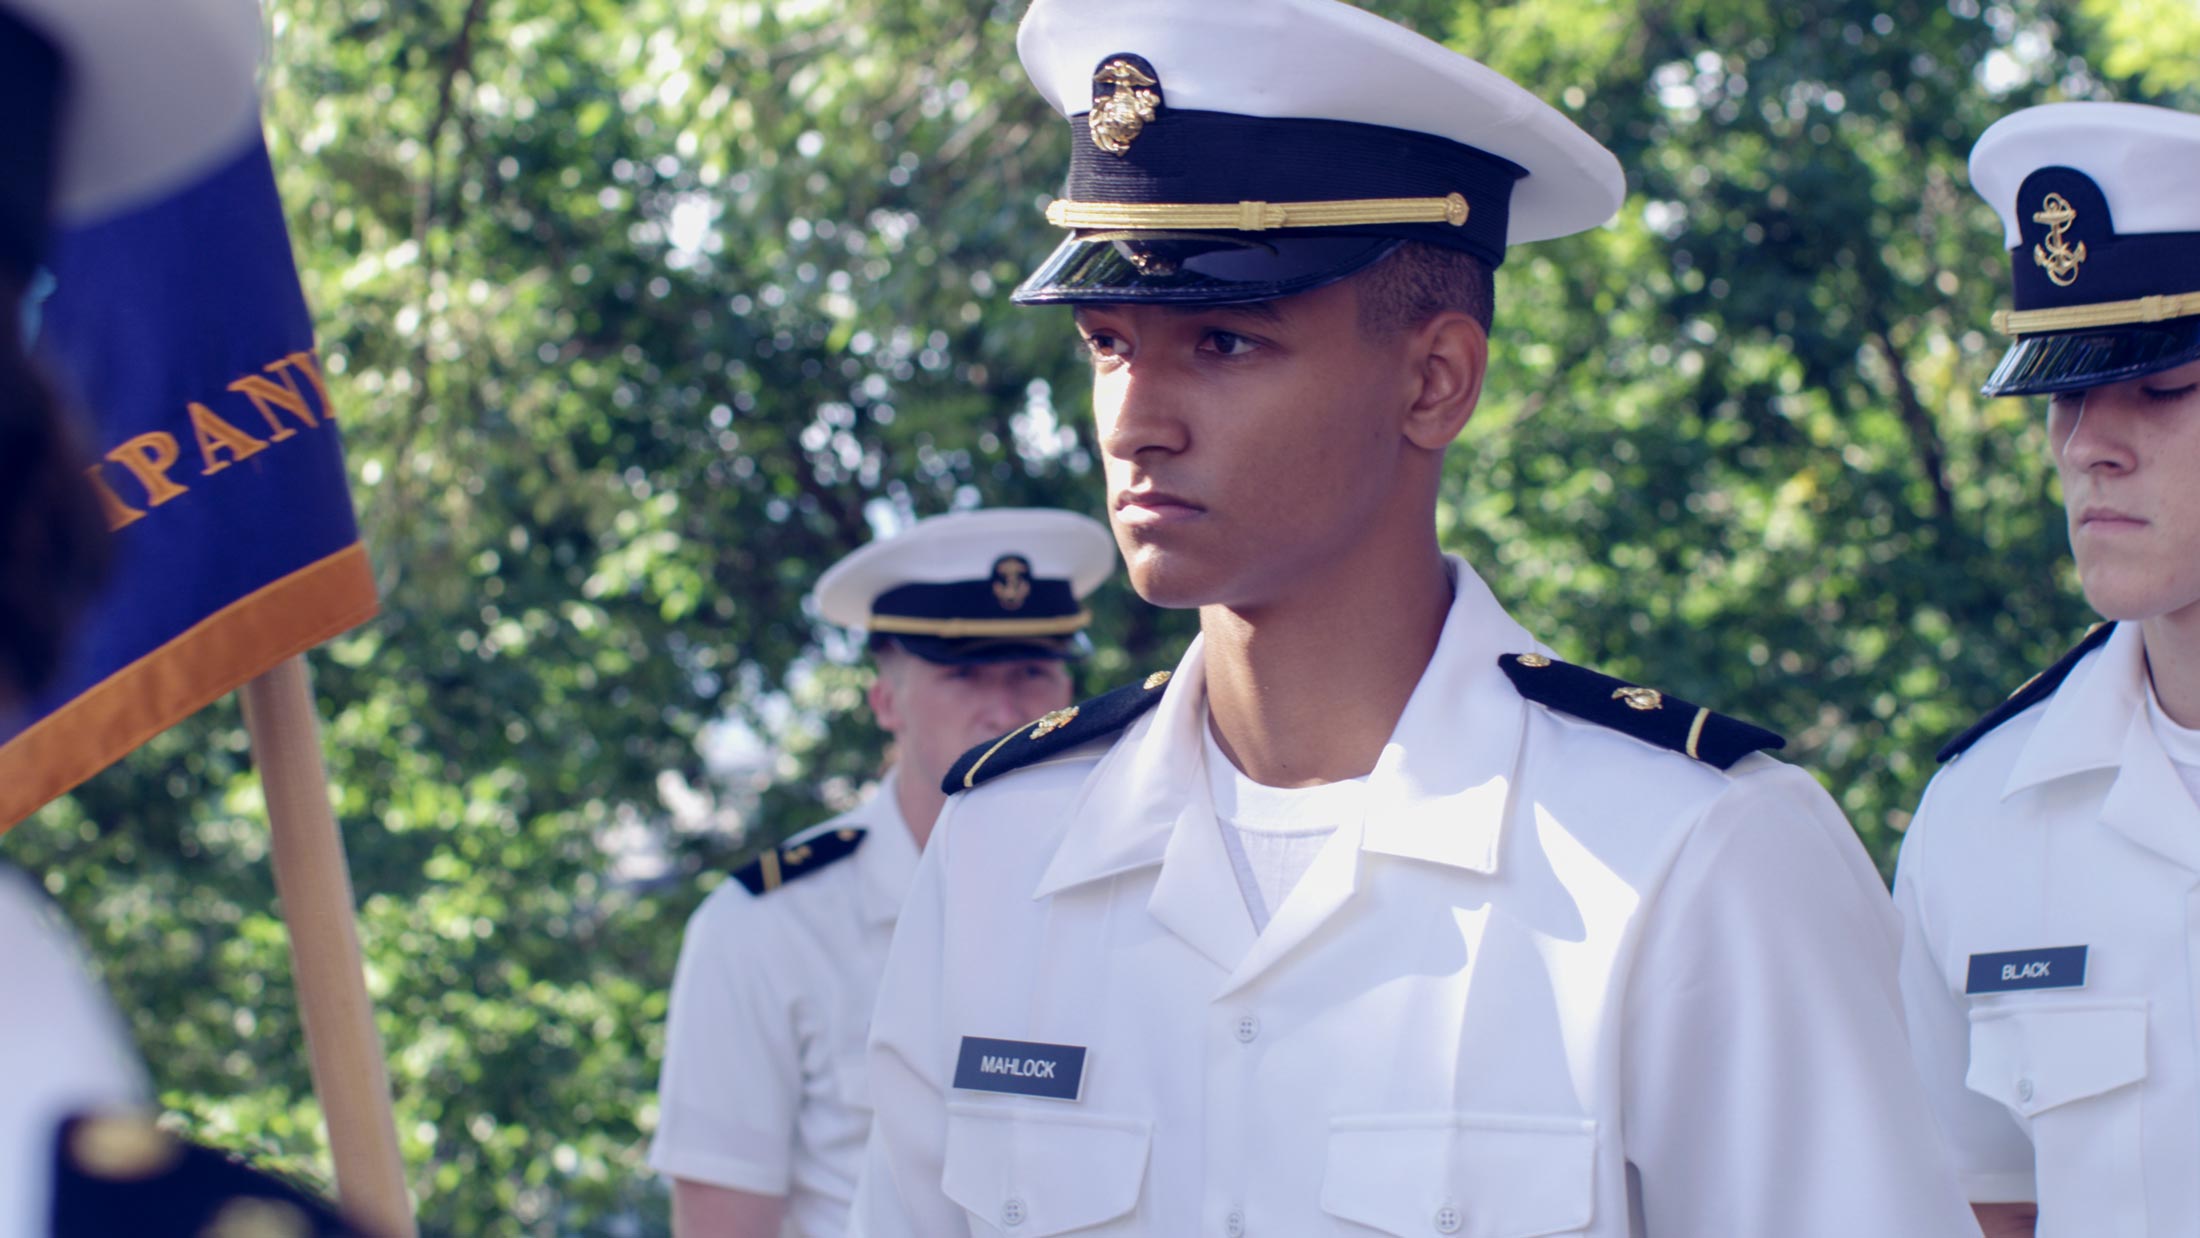 ROTC Navy Cadet in White uniform